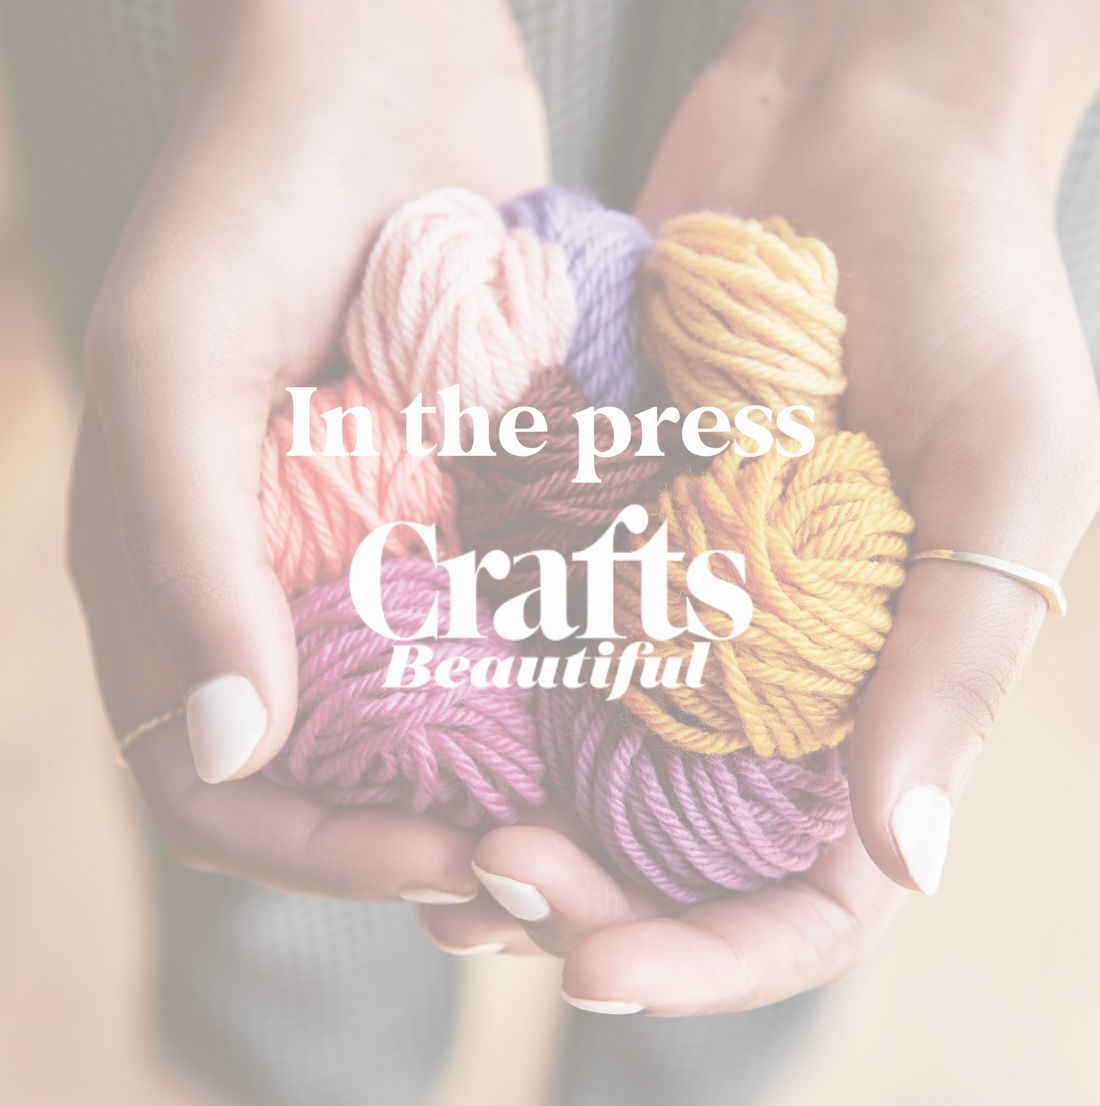 The Bargello Edit in Crafts Beautiful Magazine